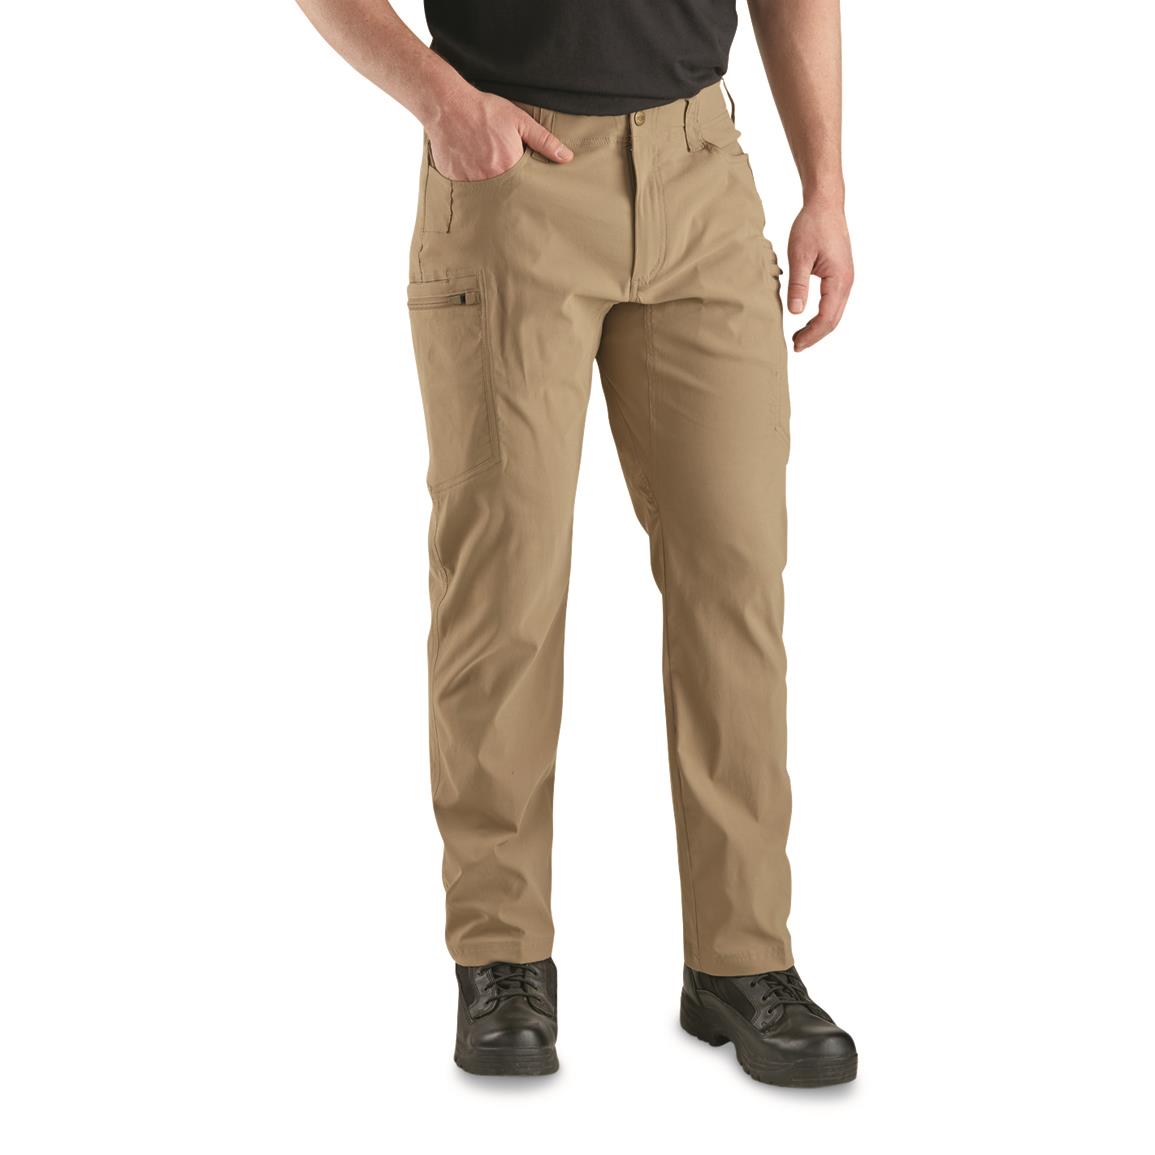 TRU-SPEC Men's 24-7 Series Agility Tactical Pants, Flat Dark Earth